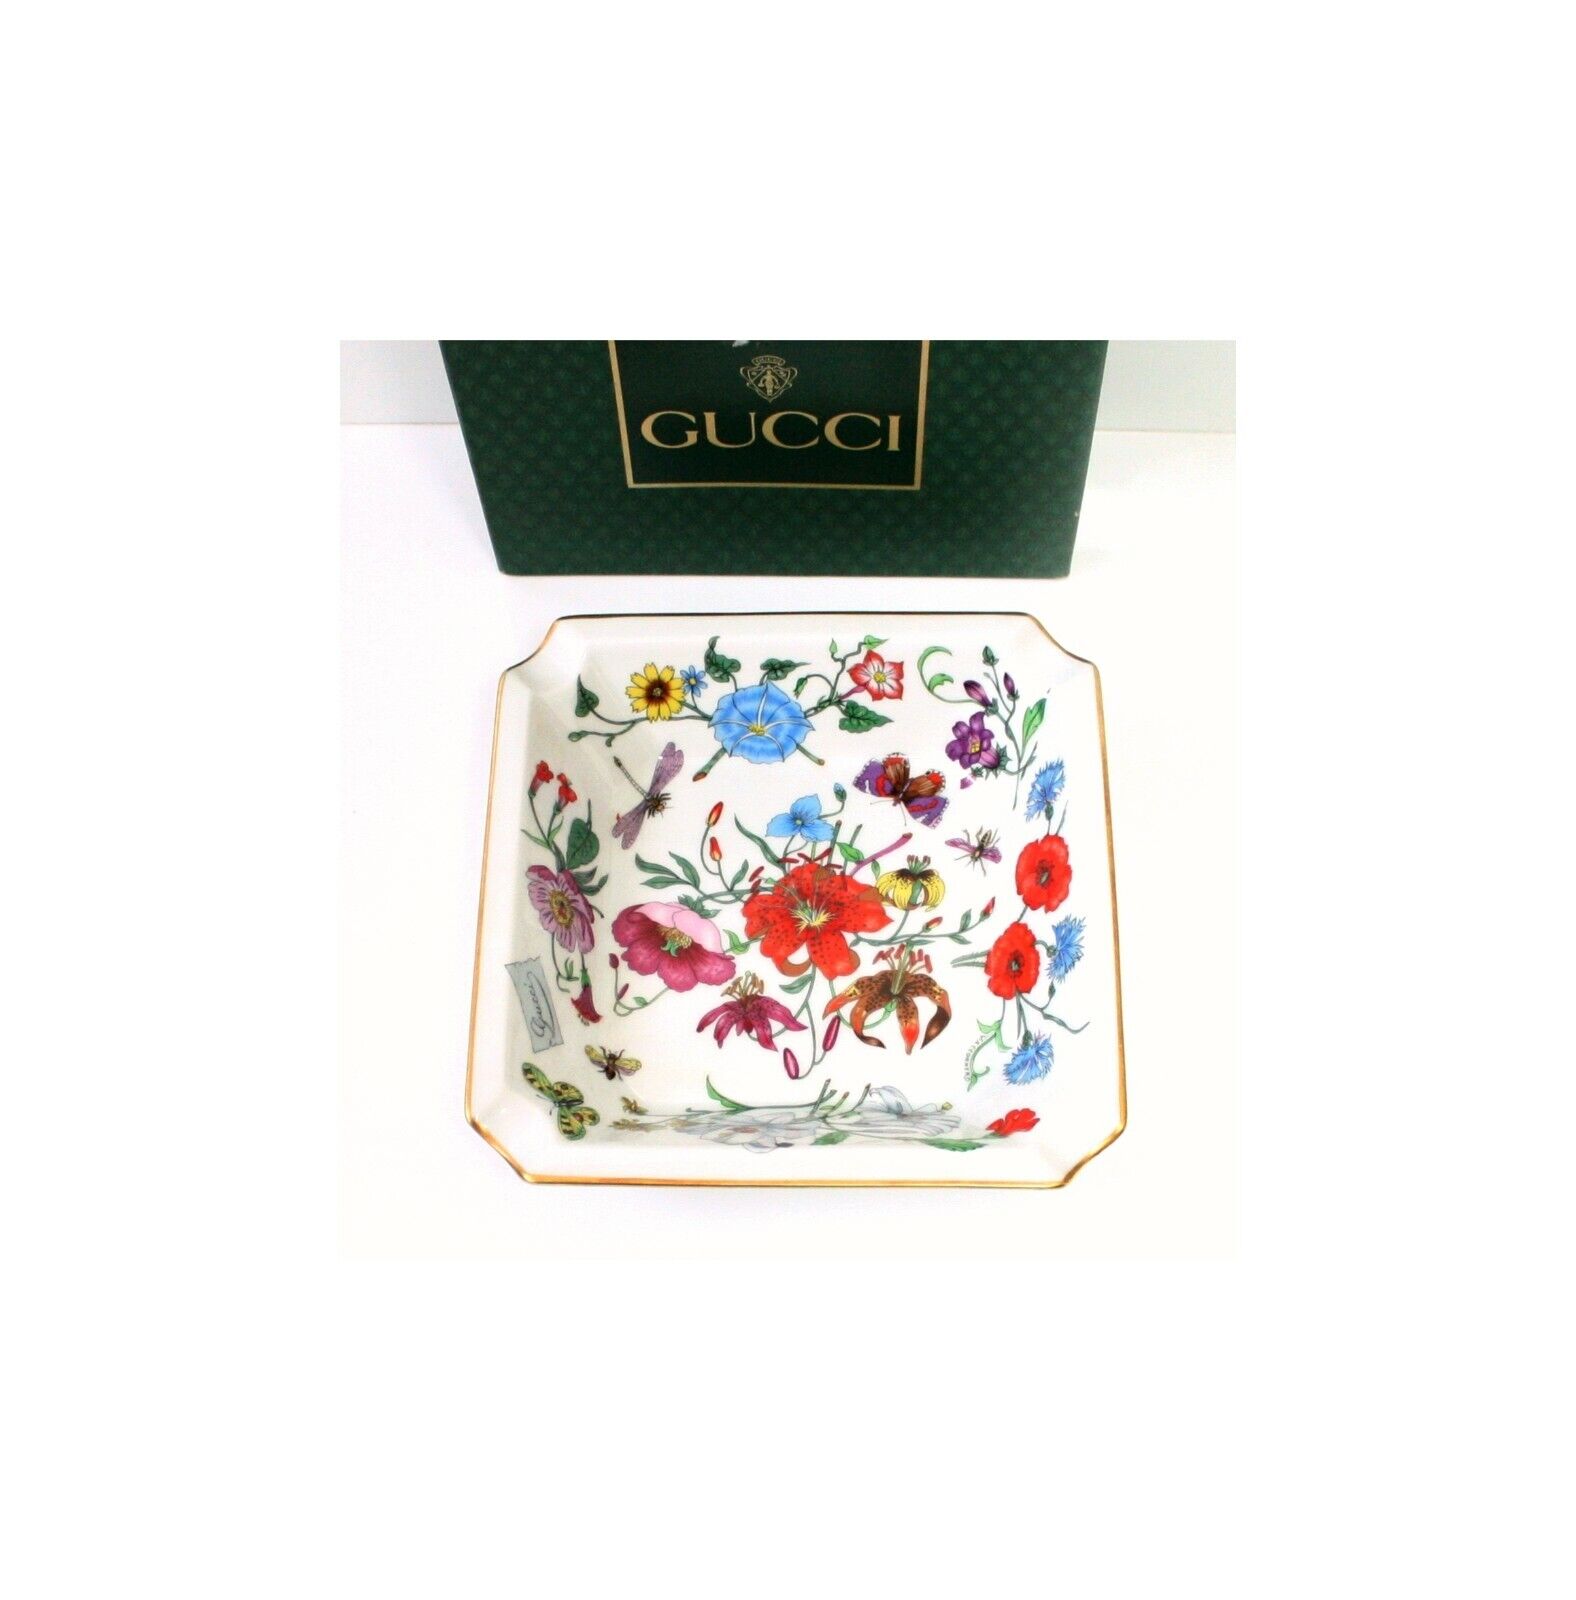 Auth GUCCI ceramic floral plate,Rare,BERNARDAUD LIMOGES. Accornero,Vintage